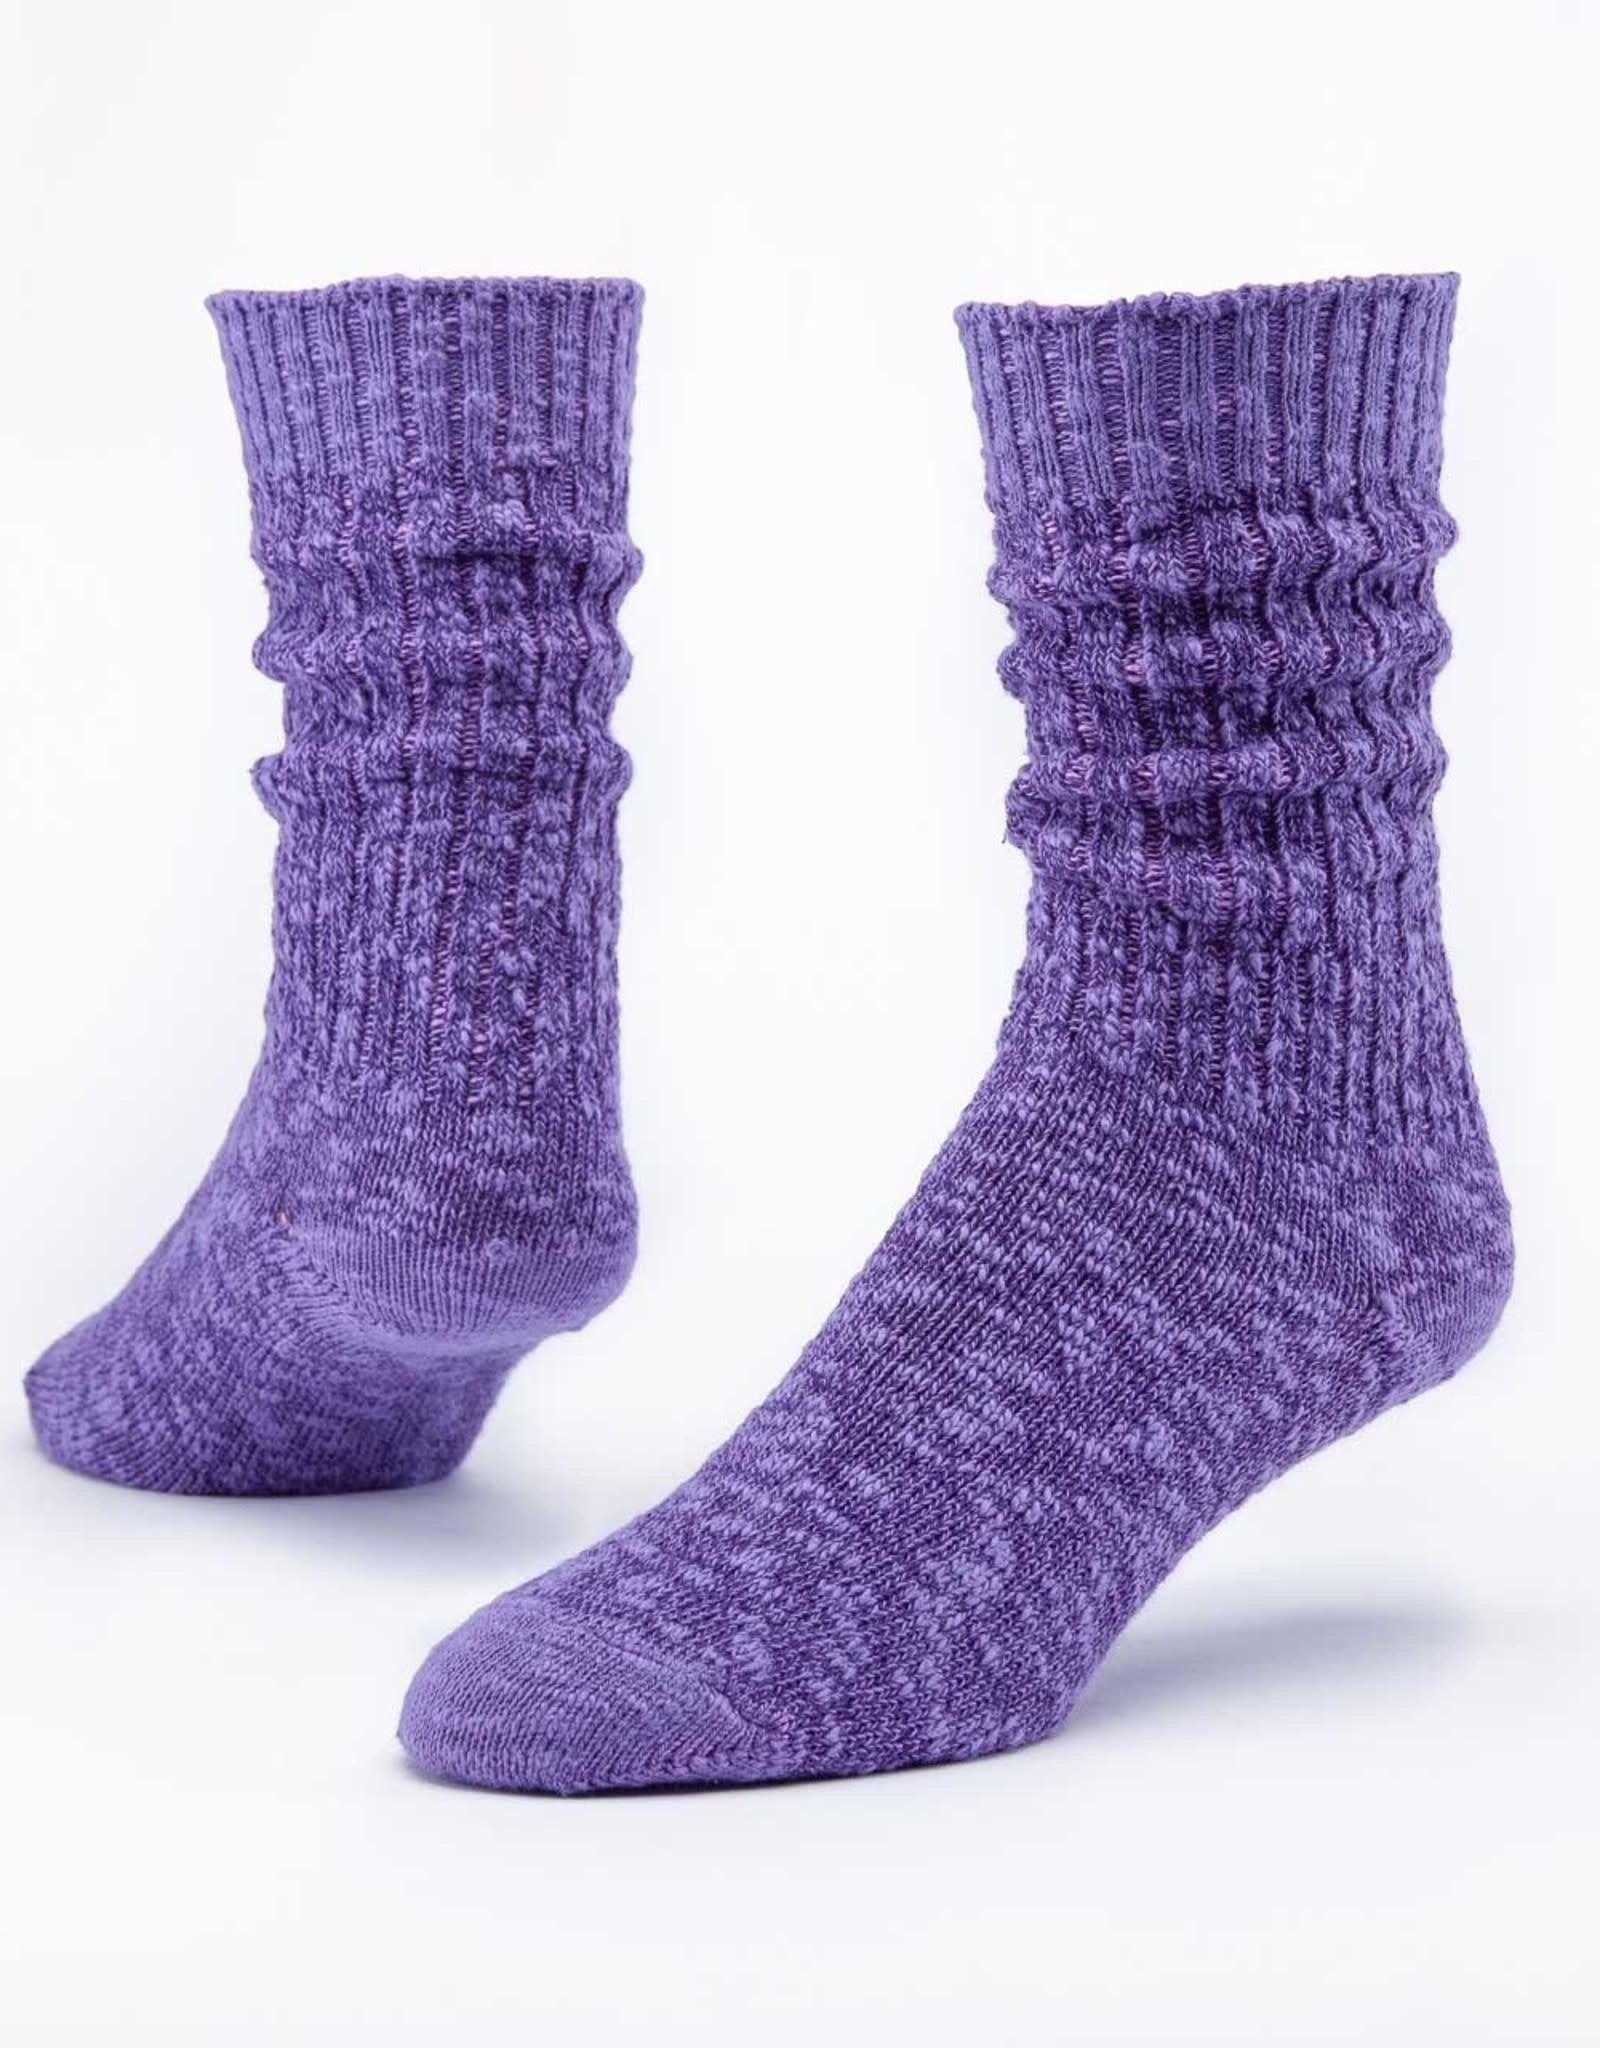 Maggie's Organics Ragg Socks (Solid Purple)